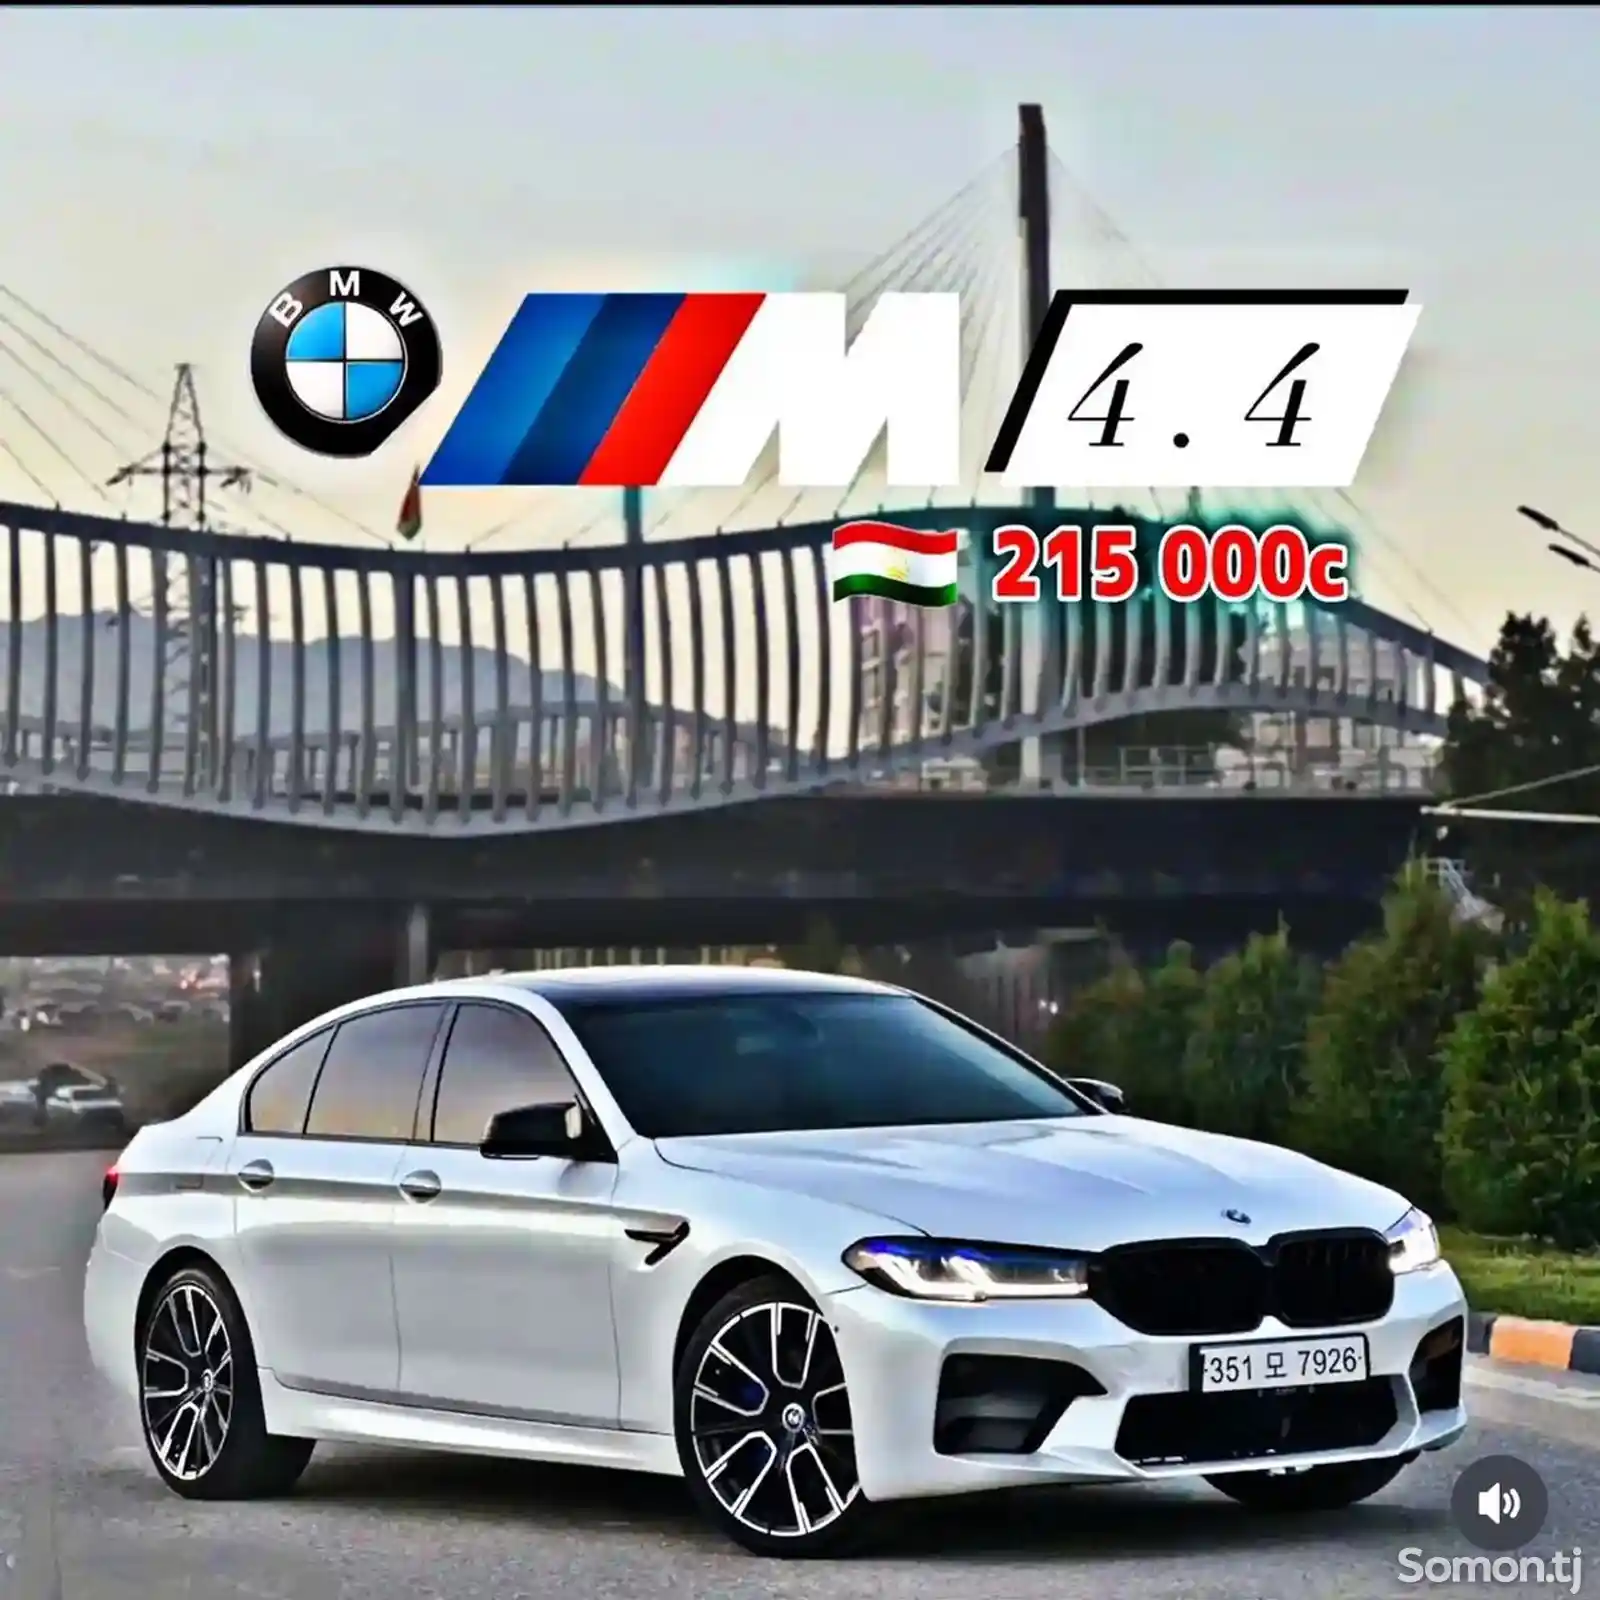 BMW 5 series, 2011-9